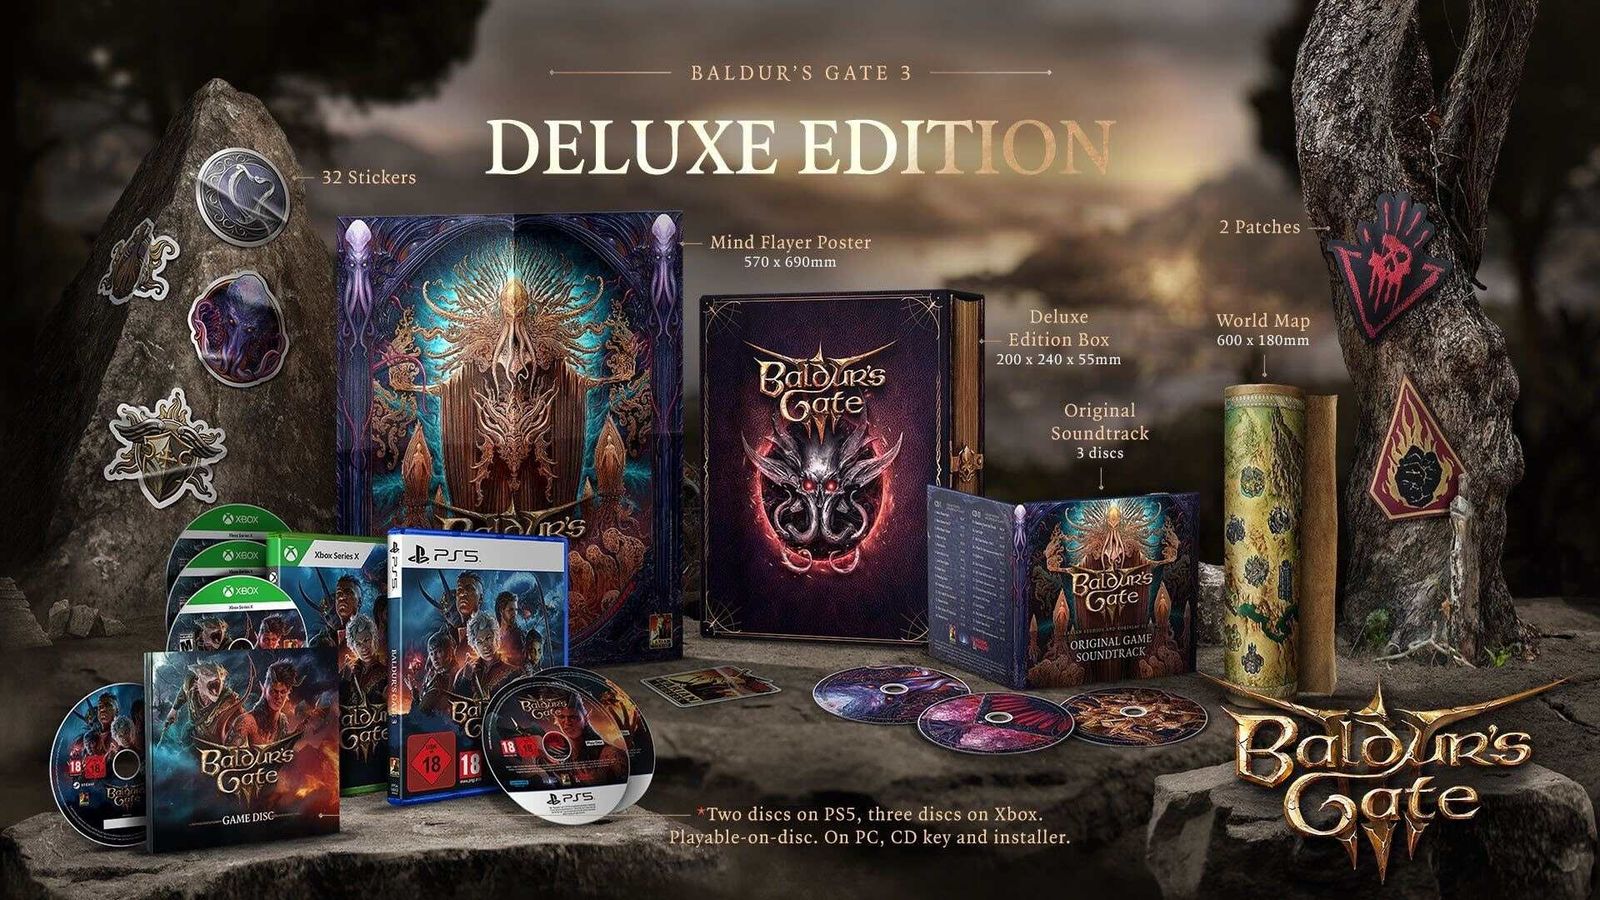 The Baldur's Gate 3 physical edition